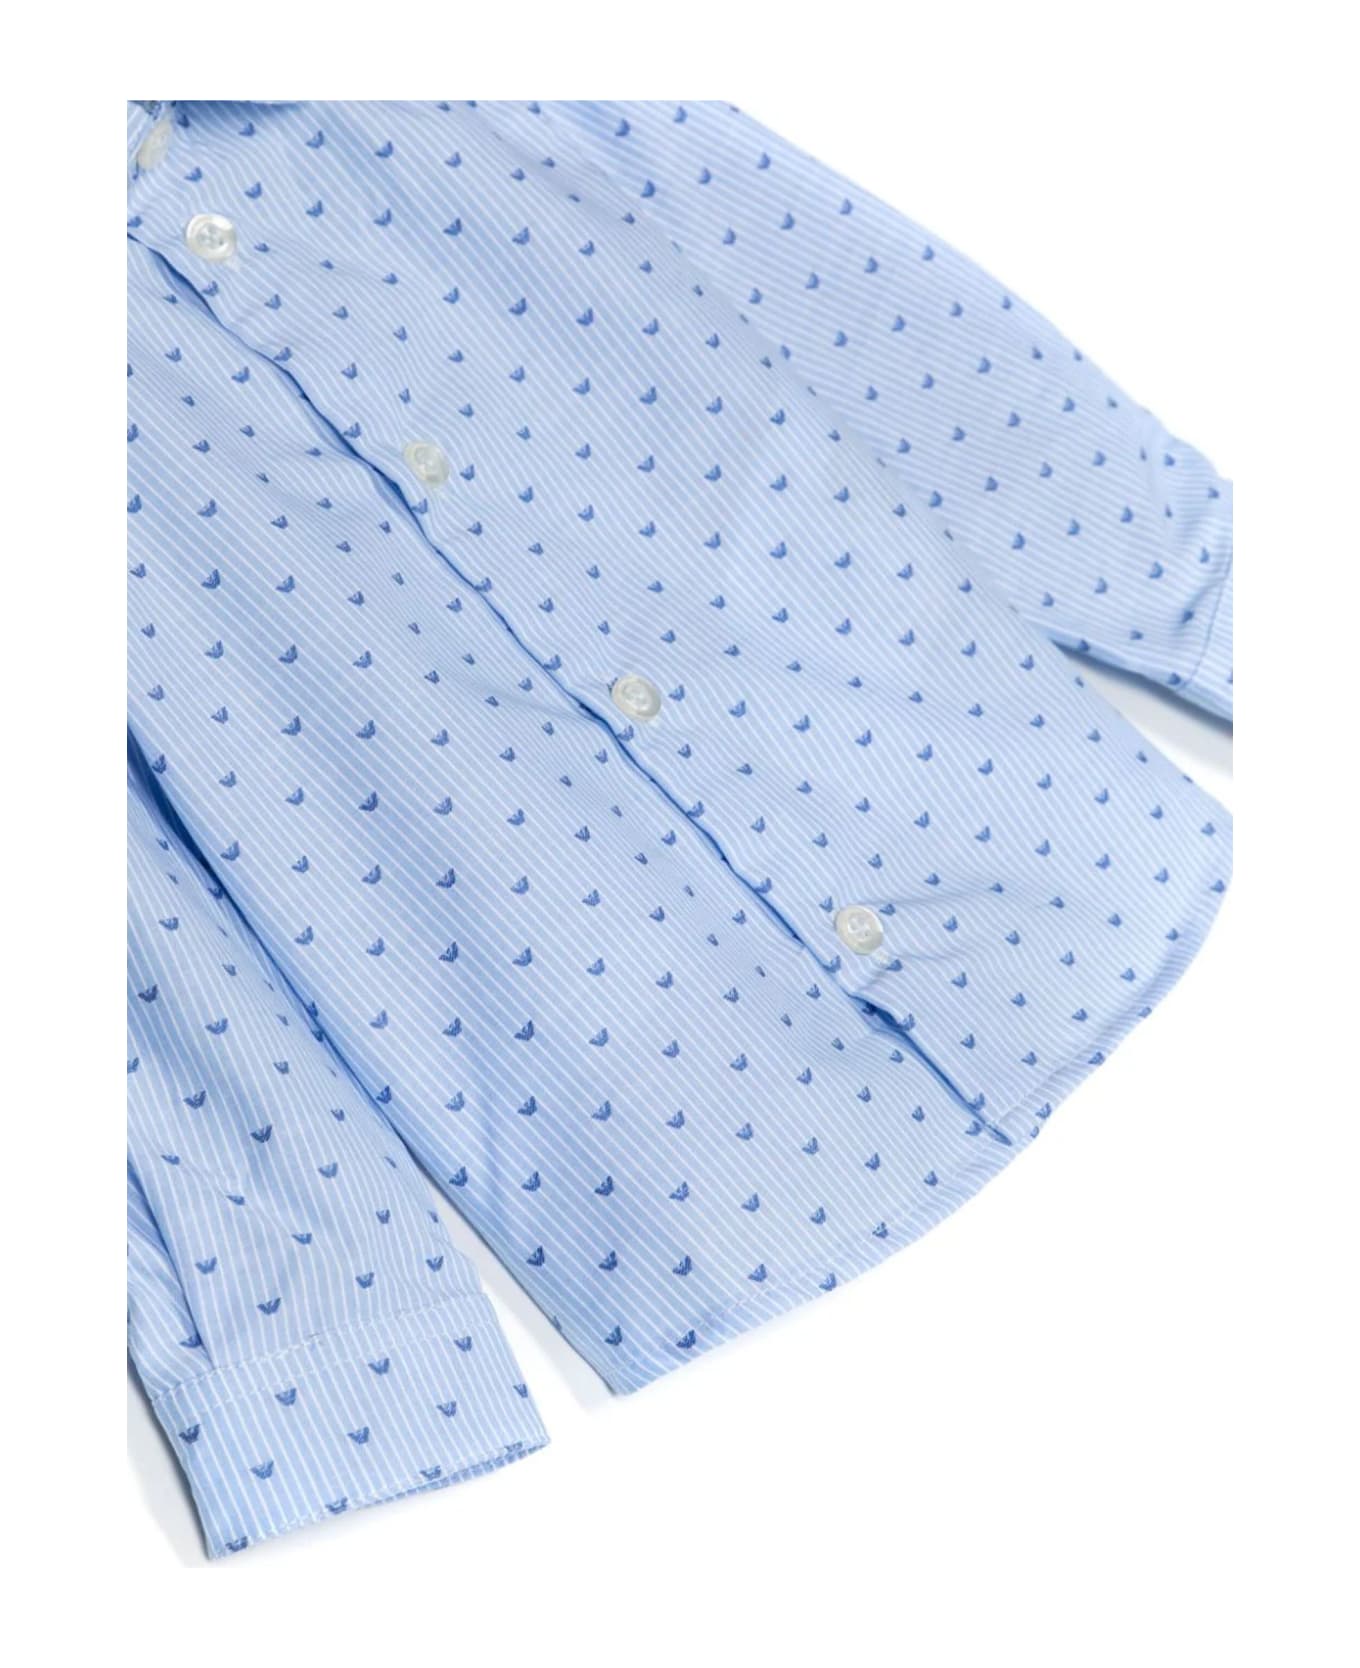 Emporio Armani Shirts Clear Blue - Clear Blue シャツ